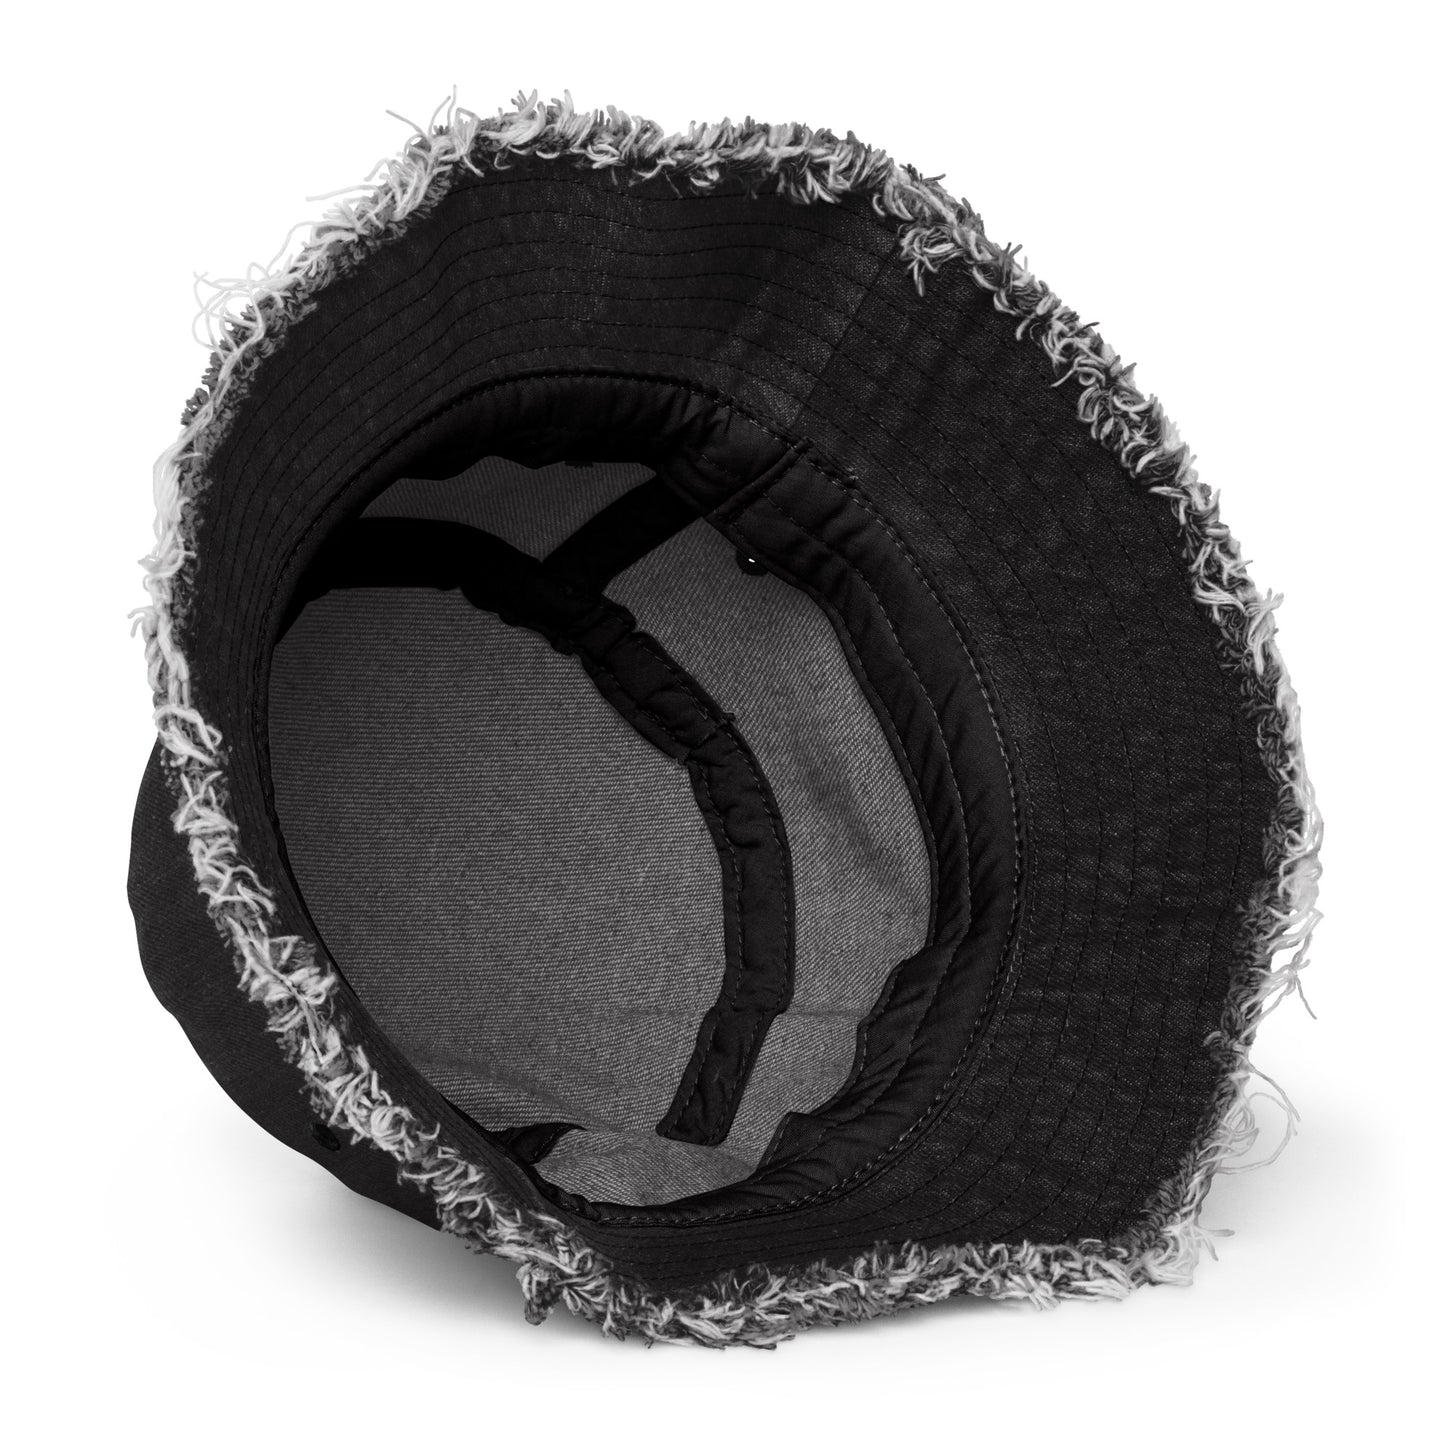 Y008 - Mũ xô denim rách (đen)